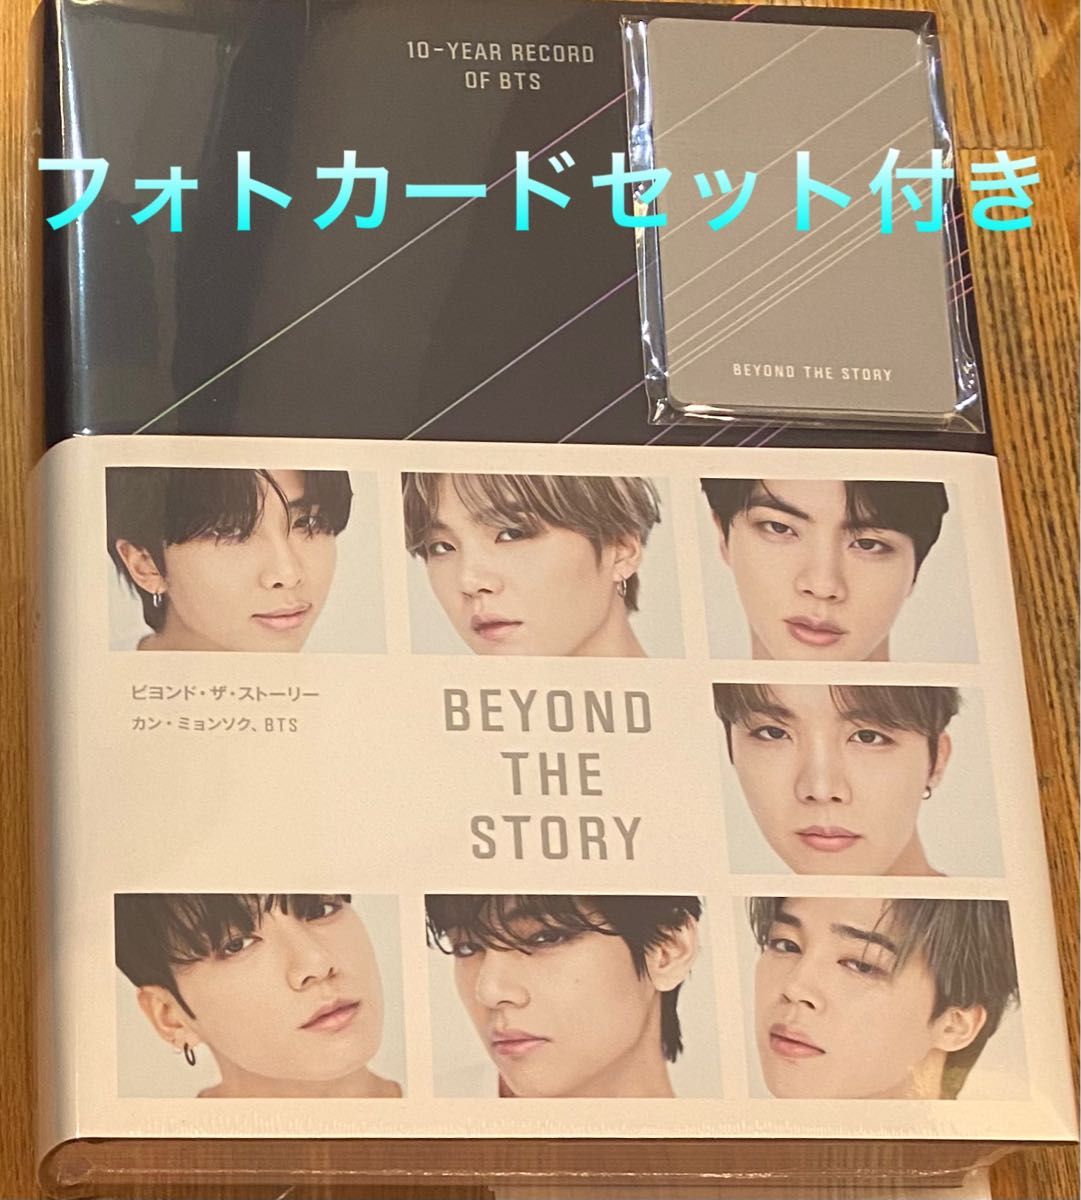 BEYOND THE STORY 10-YEAR RECORD OF BTS ビヨンド・ザ・ストーリー BTS 特典カード付き